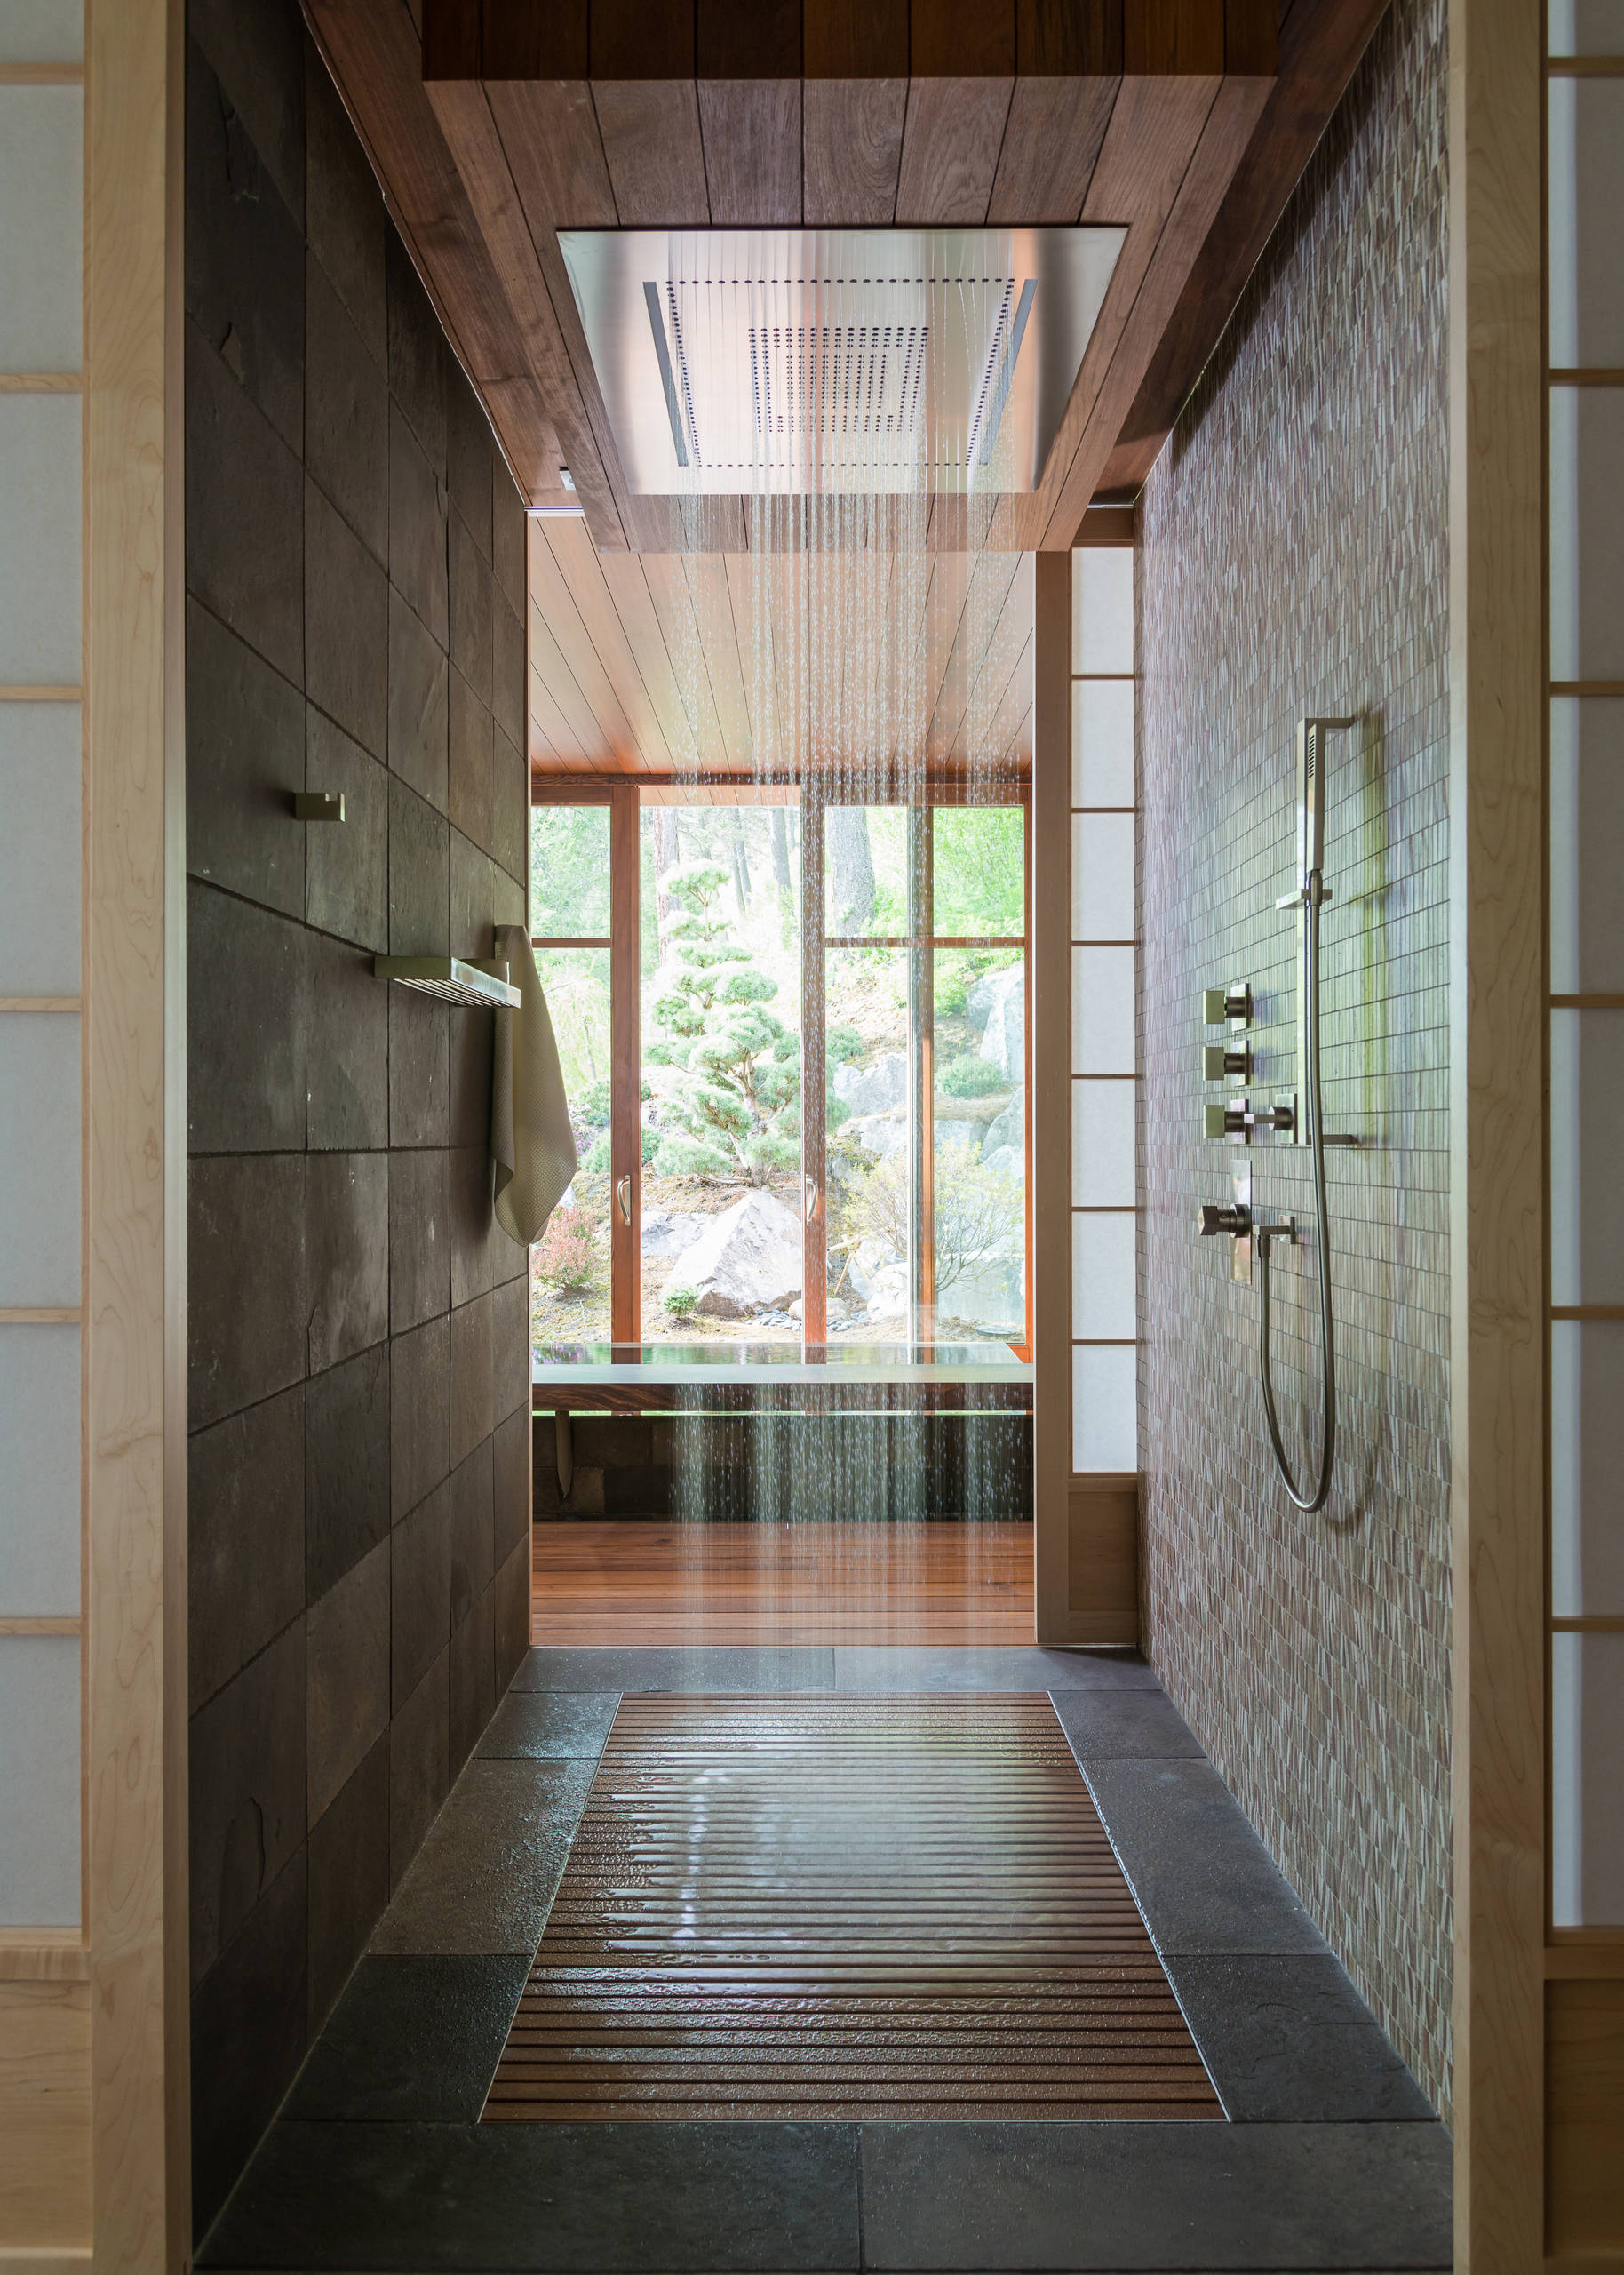 75 Beautiful Doorless Shower Pictures Ideas December 2020 Houzz